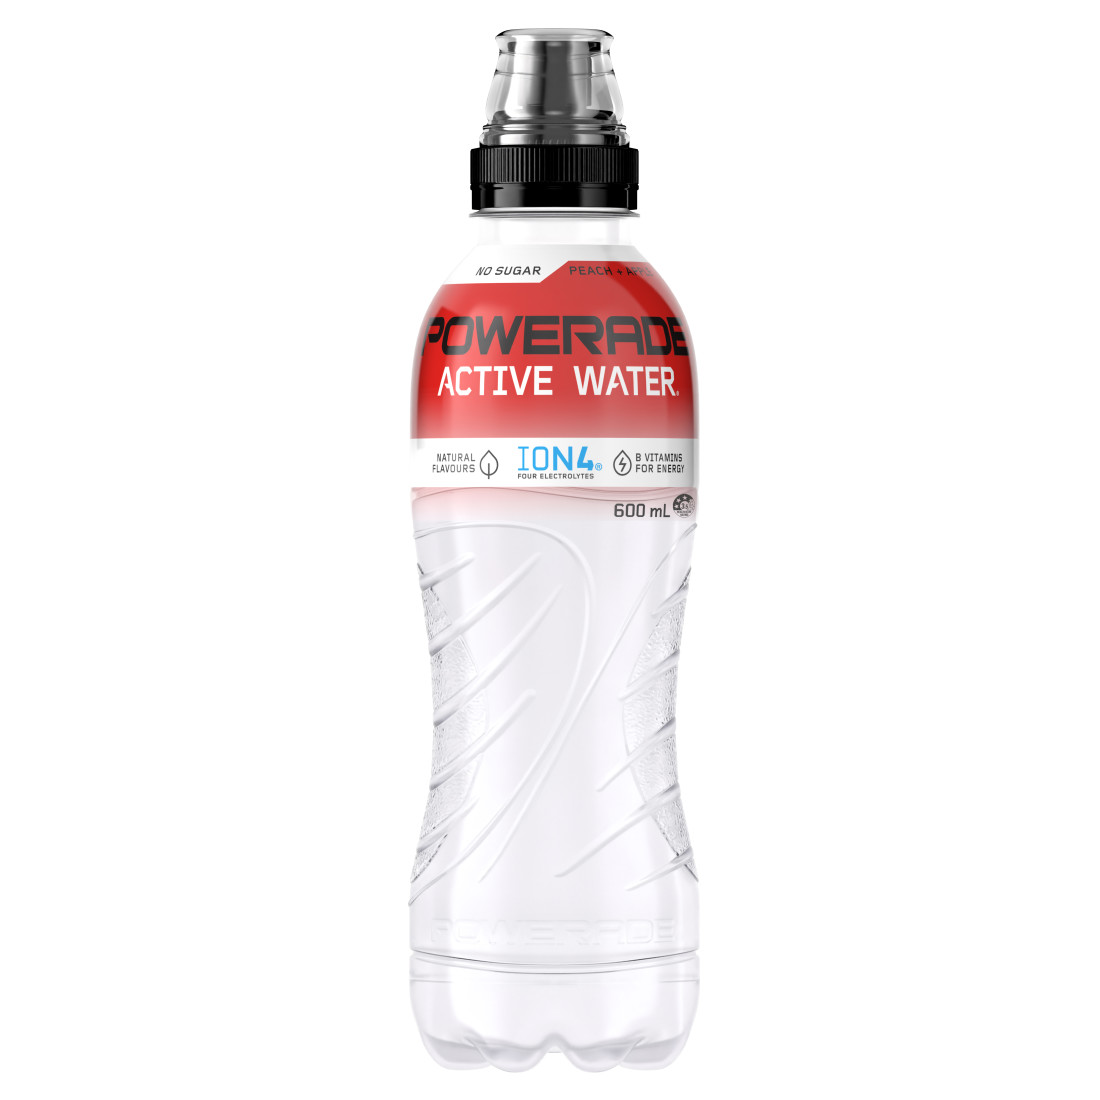 Powerade Active Water Peach & Apple bottle